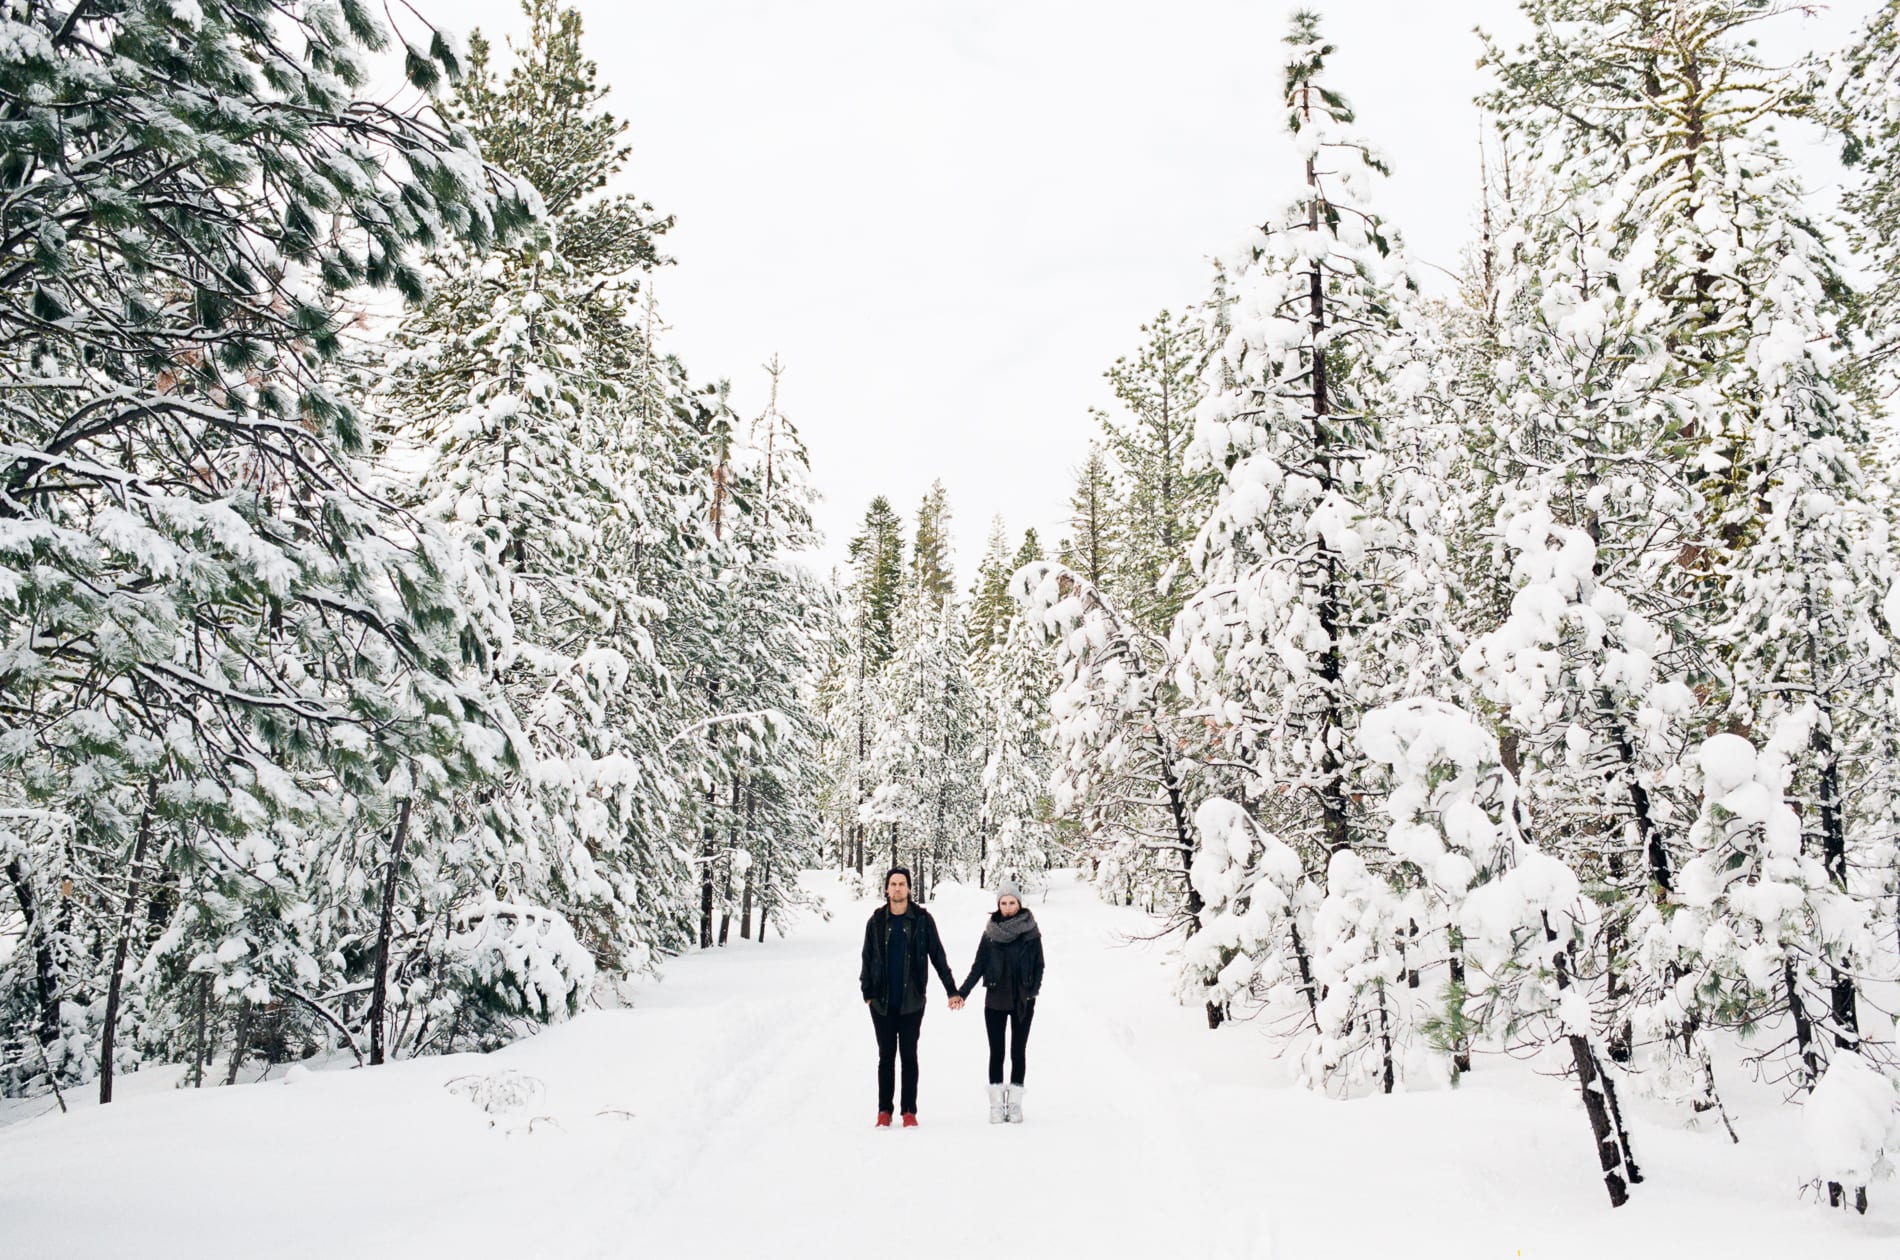 mt-lassen-winter-snow-couples-photo-6